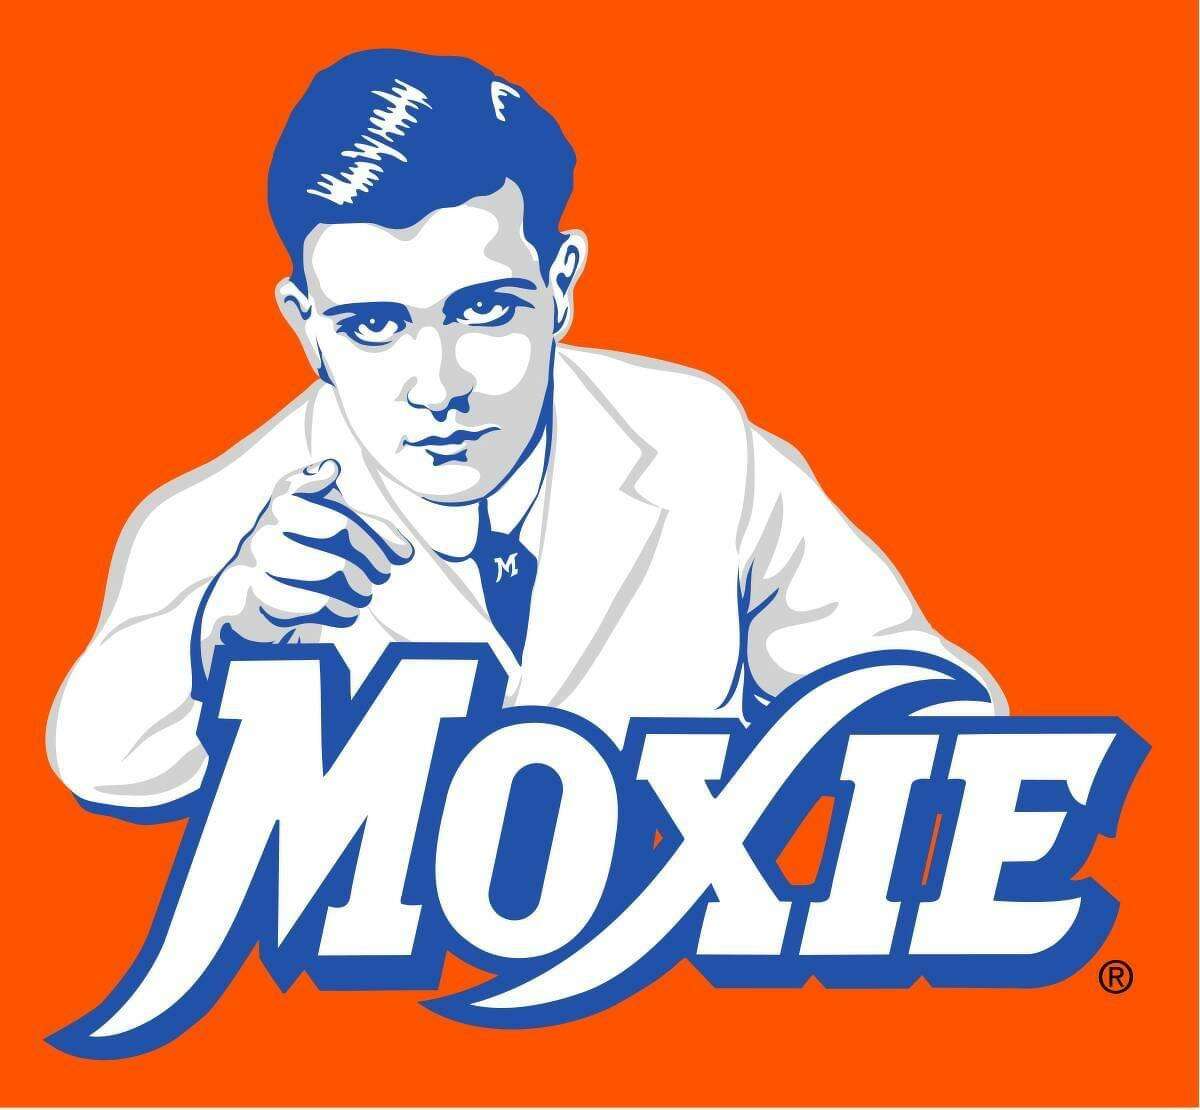 A vintage advertisement for Moxie nerve tonic.